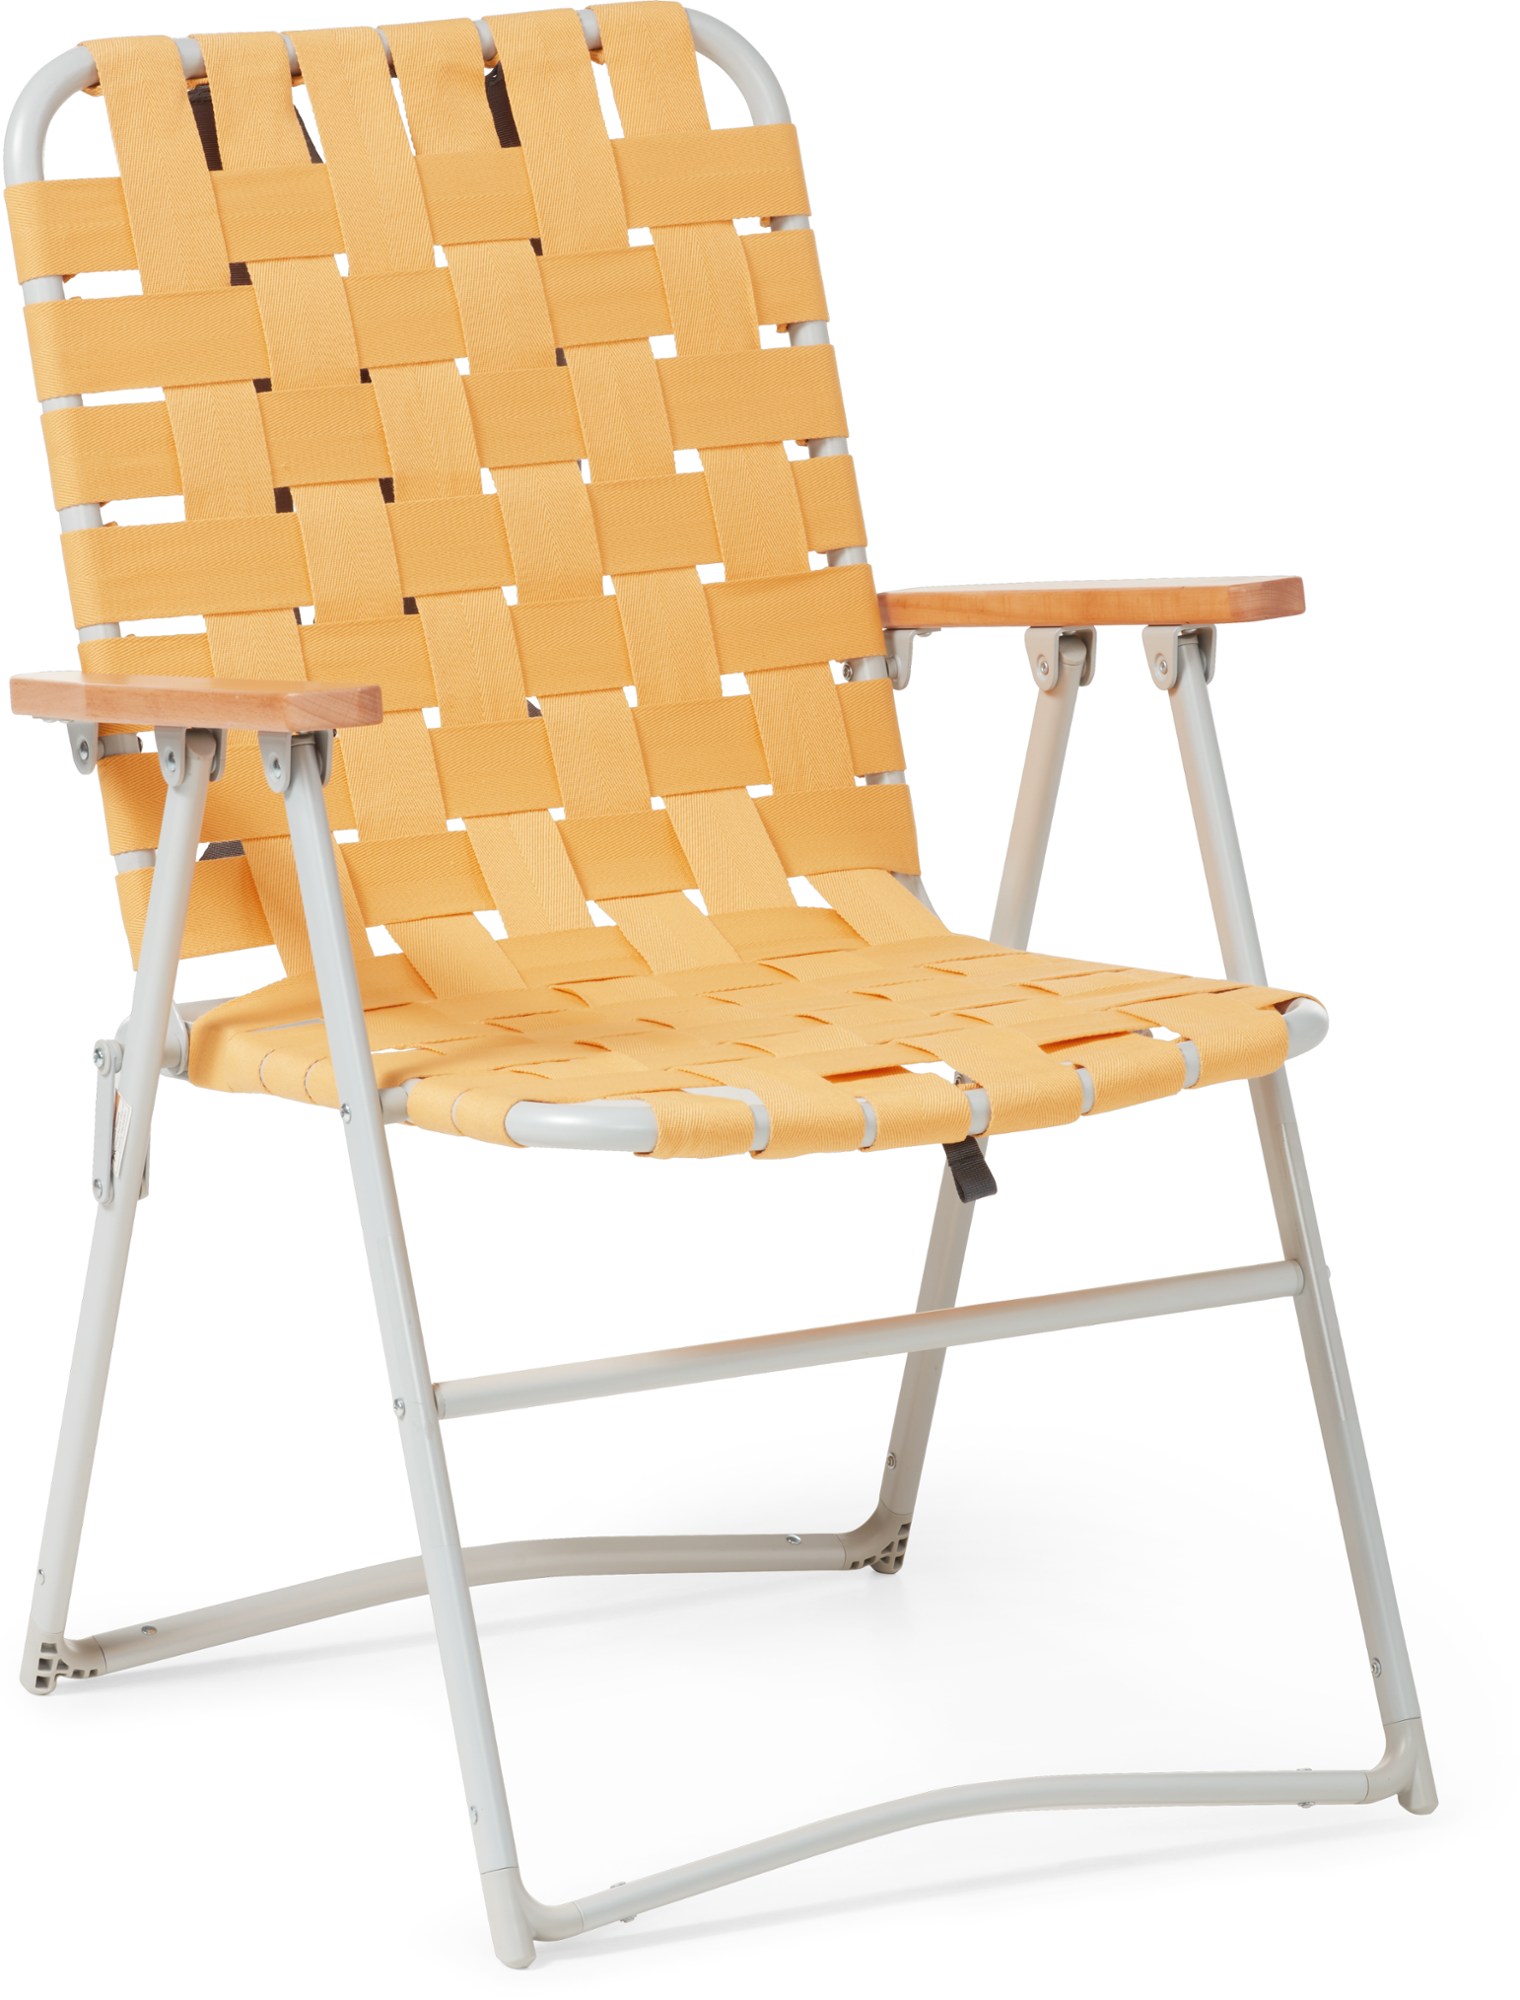 Классический садовый стул Outward REI Co-op, желтый